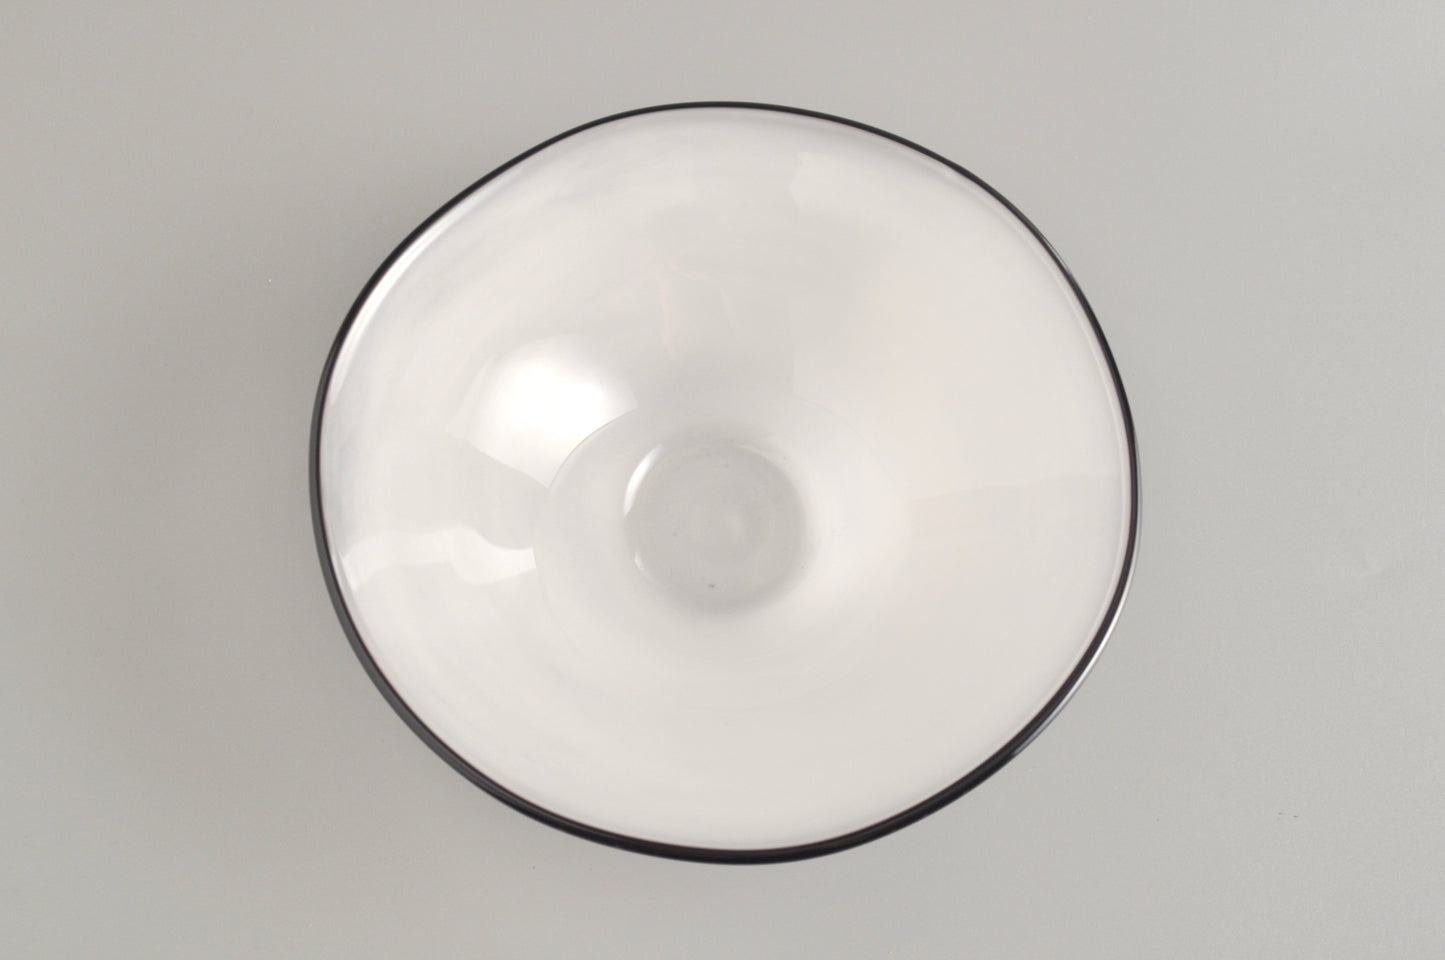 kasumi bowl S ivory 3798